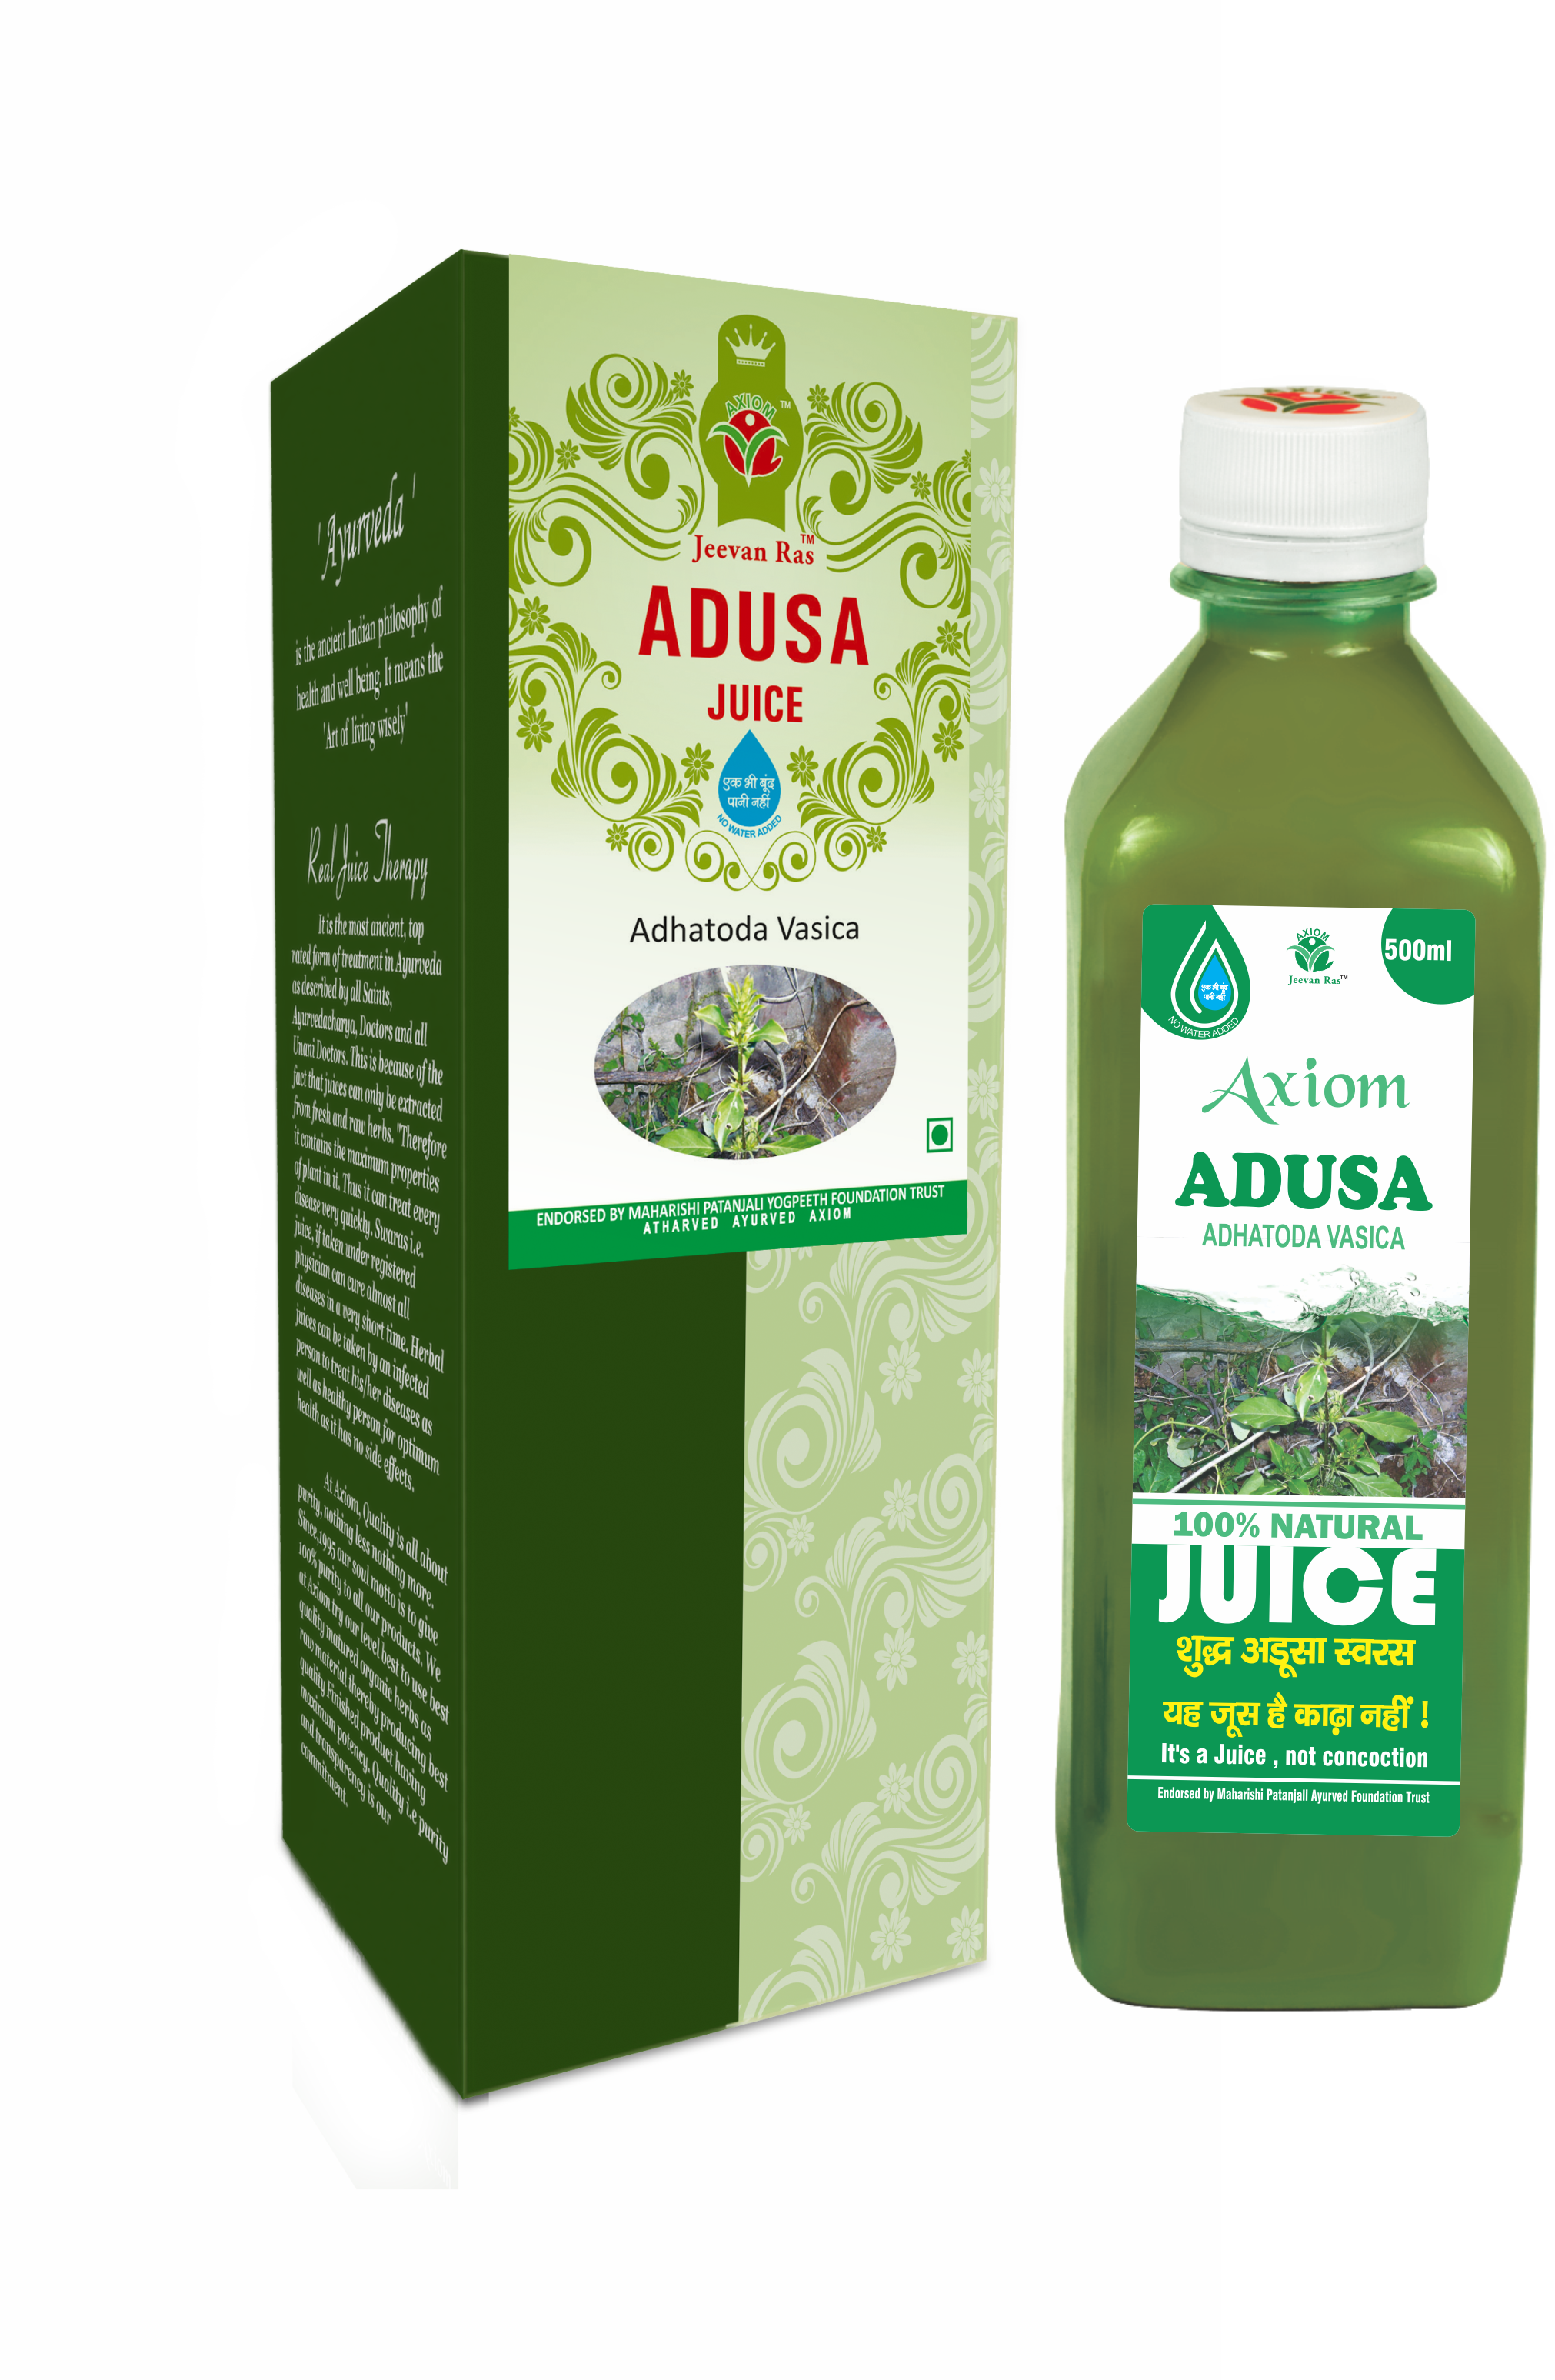 Buy Axiom Adusa Juice at Best Price Online